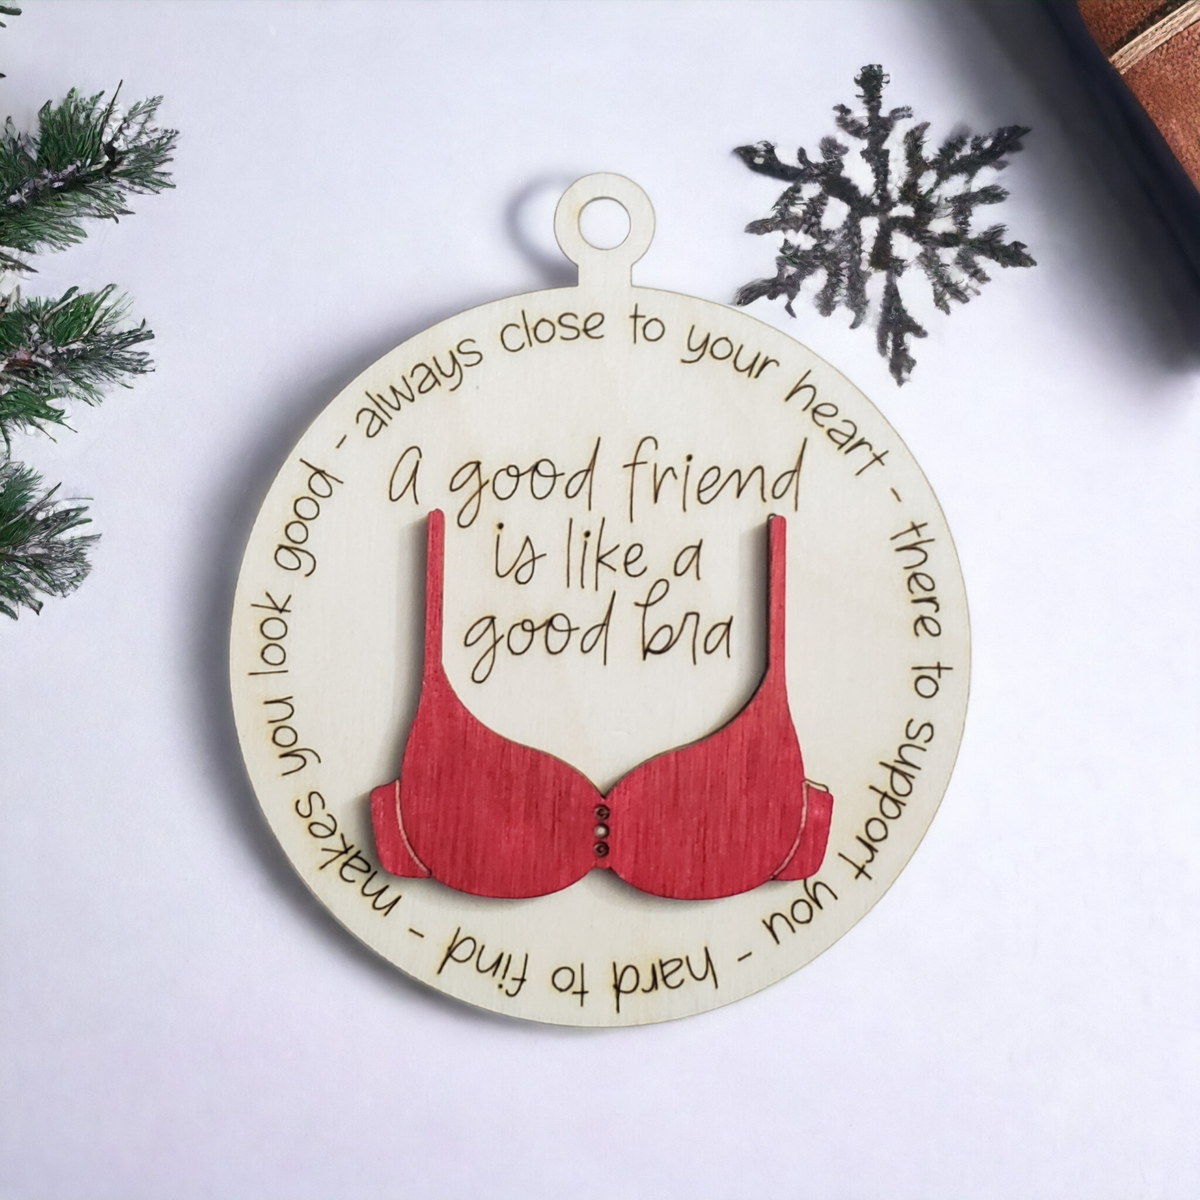 A good friend is like a good bra Christmas Ornament – Wholesale By Kali